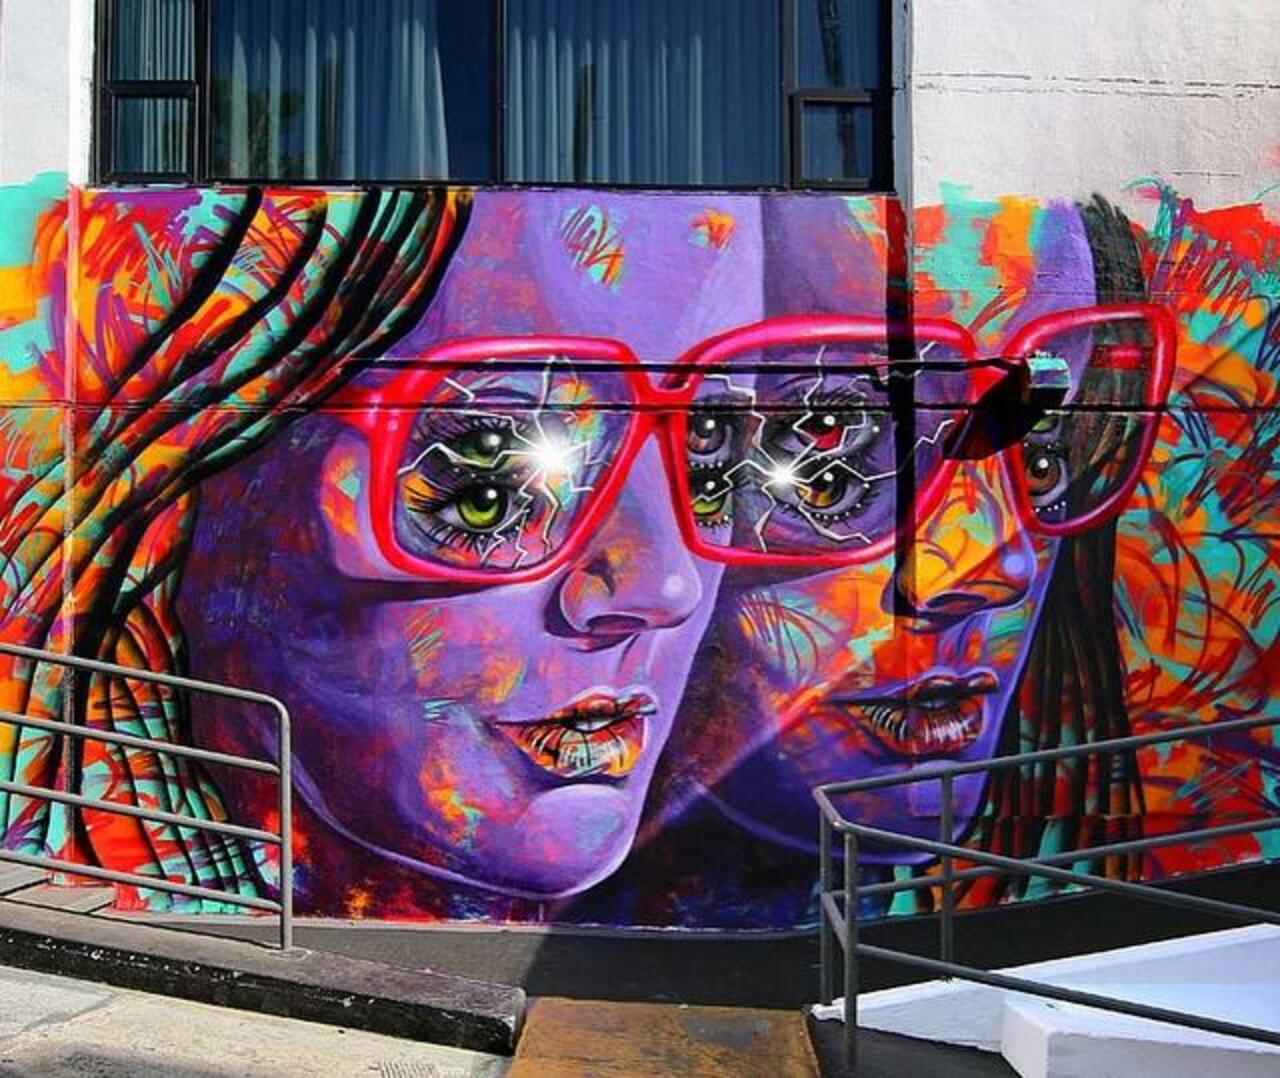 Fantastic new Street Art by MADSTEEZ 

#art #arte #graffiti #streetart http://t.co/UjINkQoSLC From: GoogleStreetArt